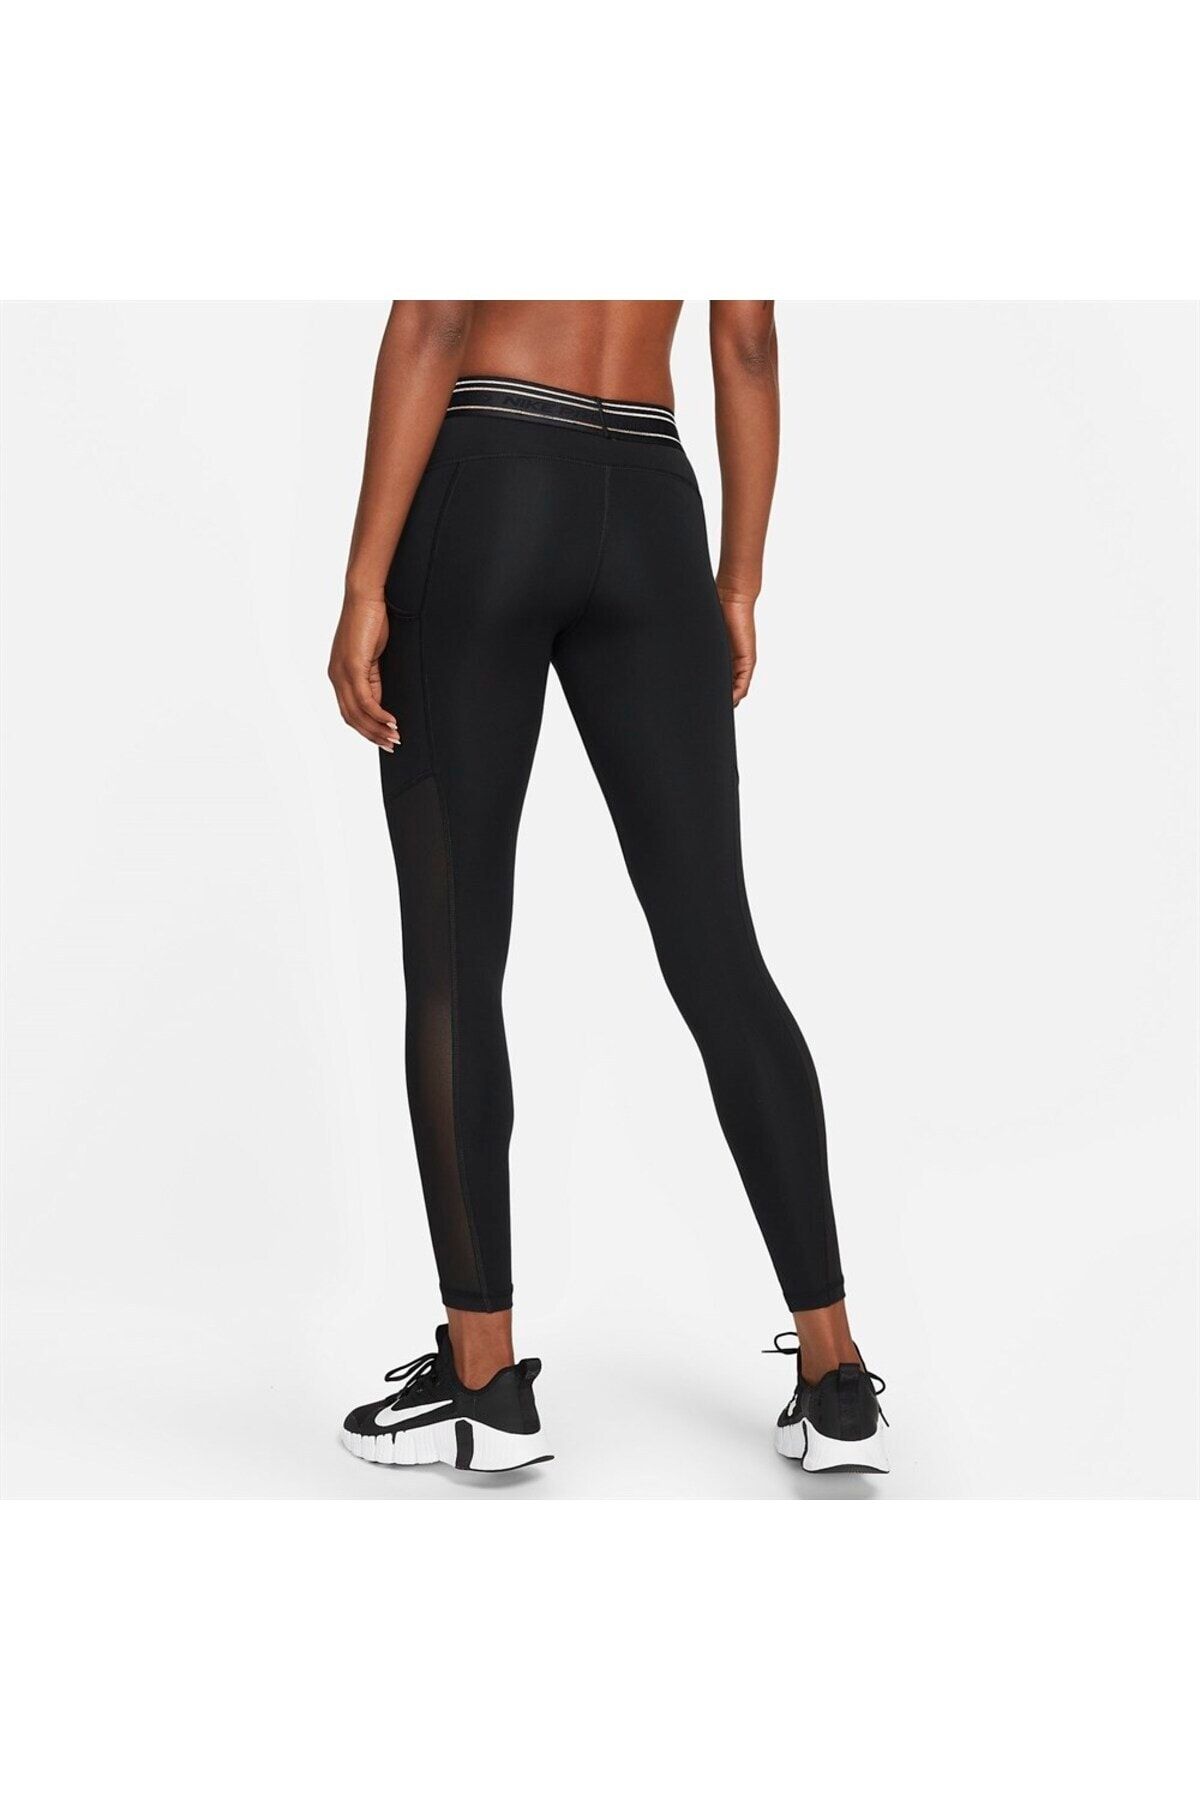 Nike Women Capri Pants & Bermudas Styles, Prices - Trendyol